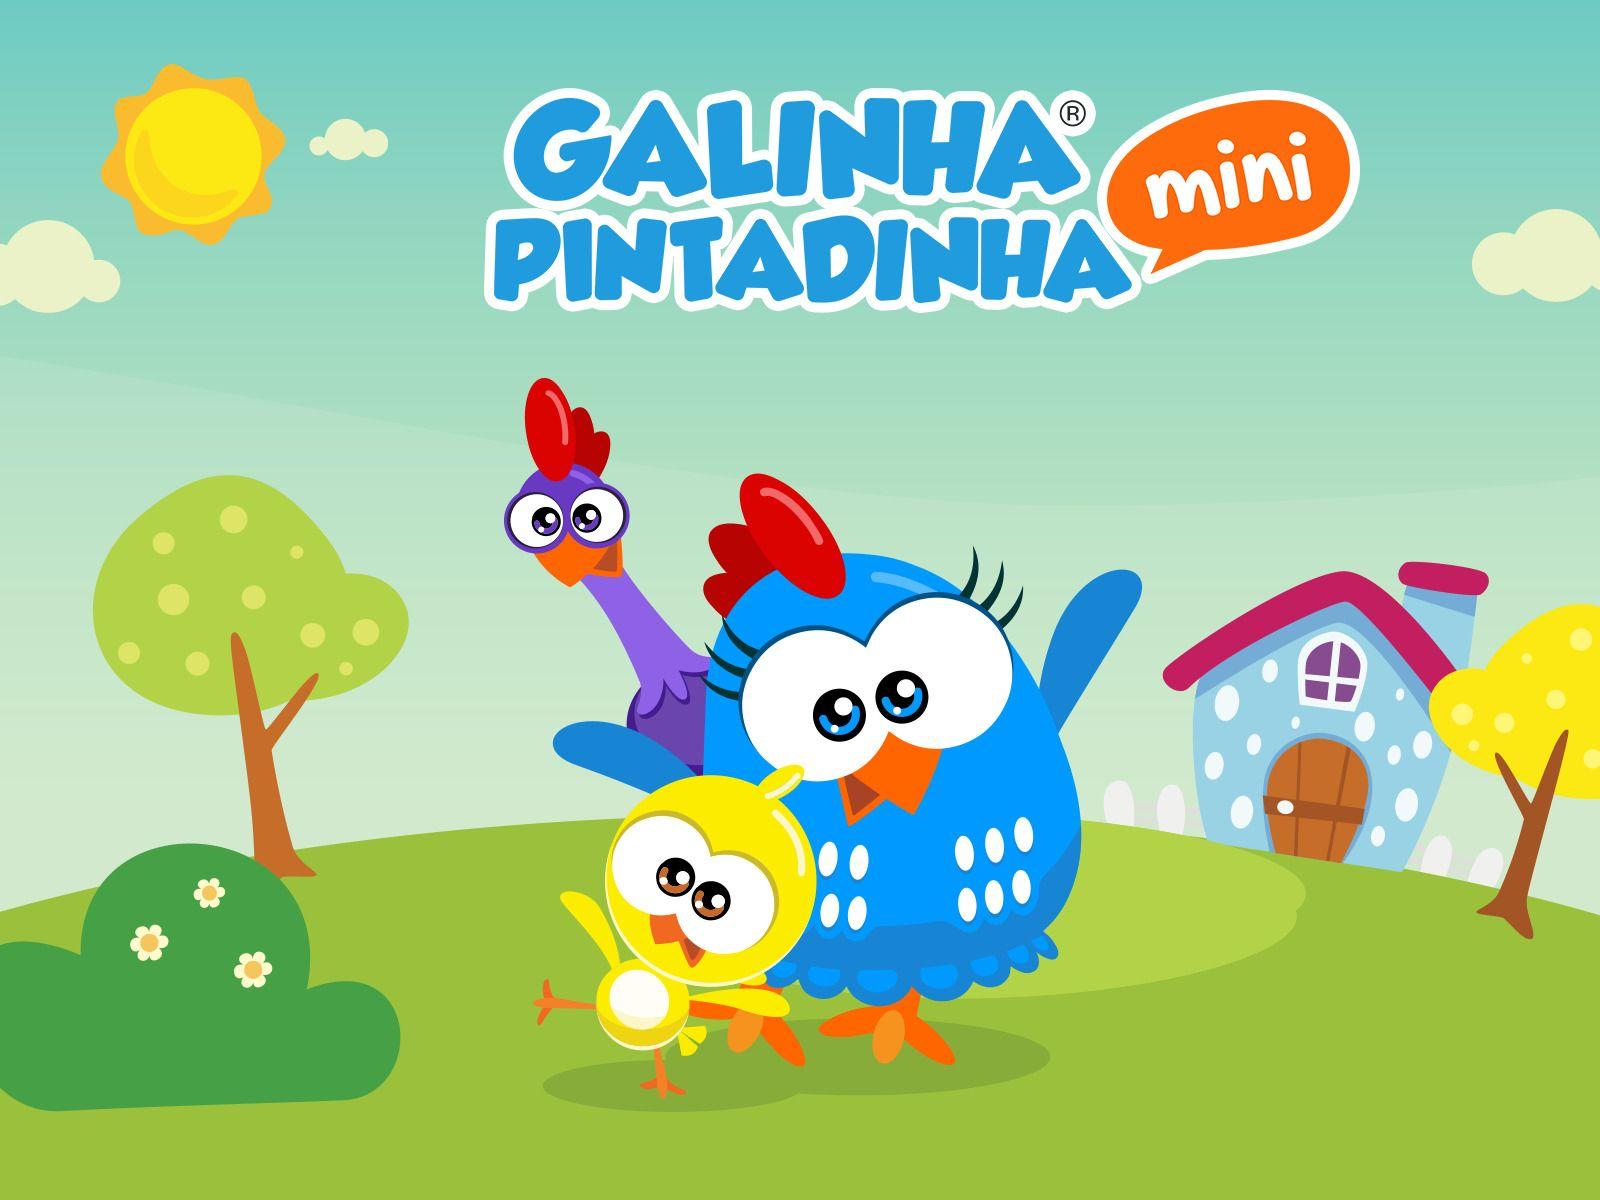 Video chính 1600x1200: Galinha Pintadinha Mini